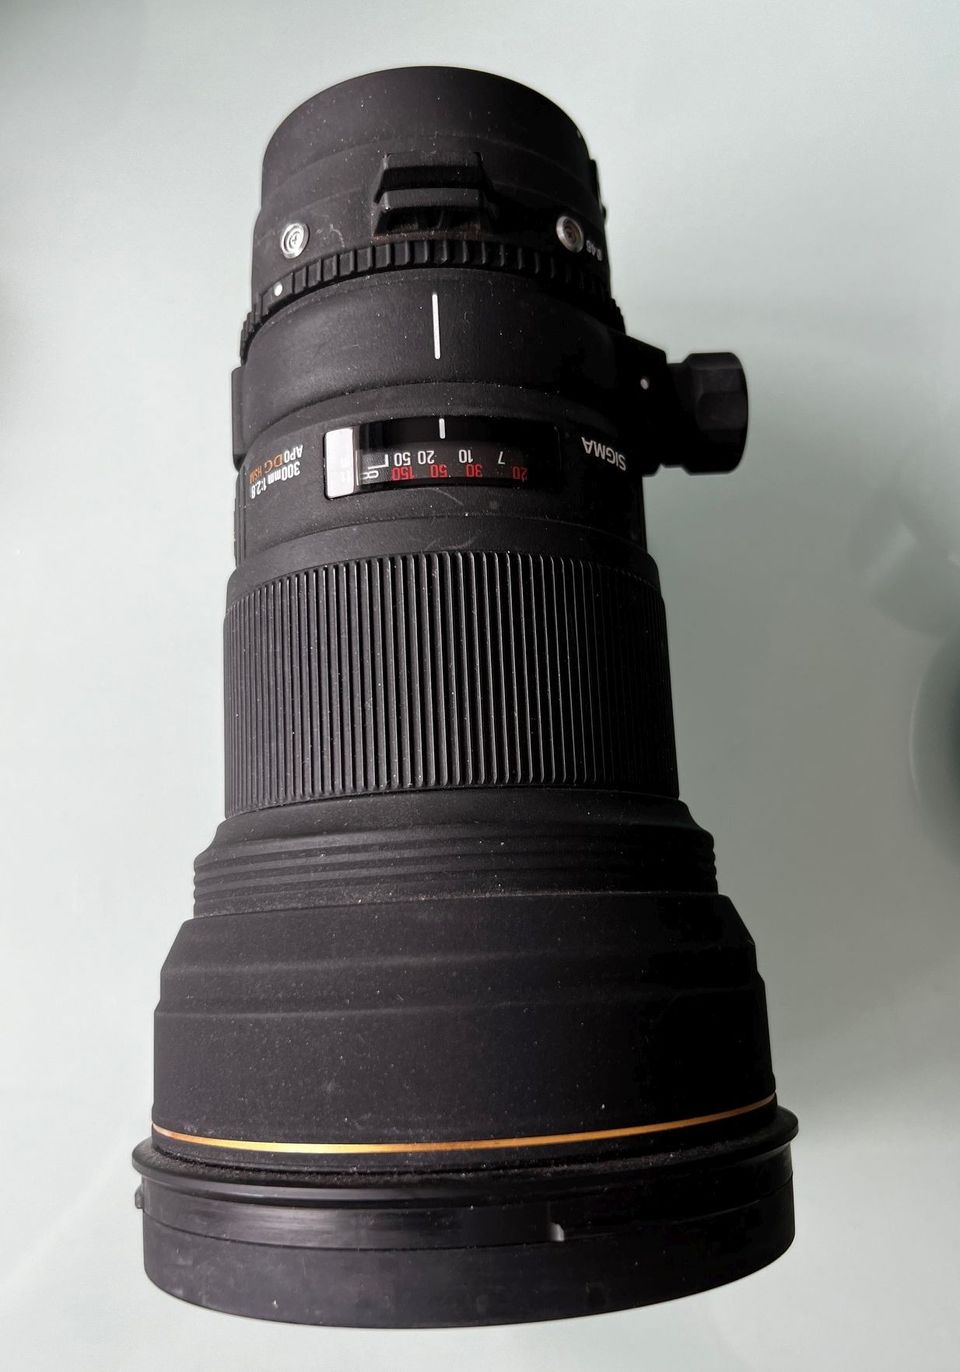 Sigma 300mm f/2.8 EX APO DG HSM - Canon EF